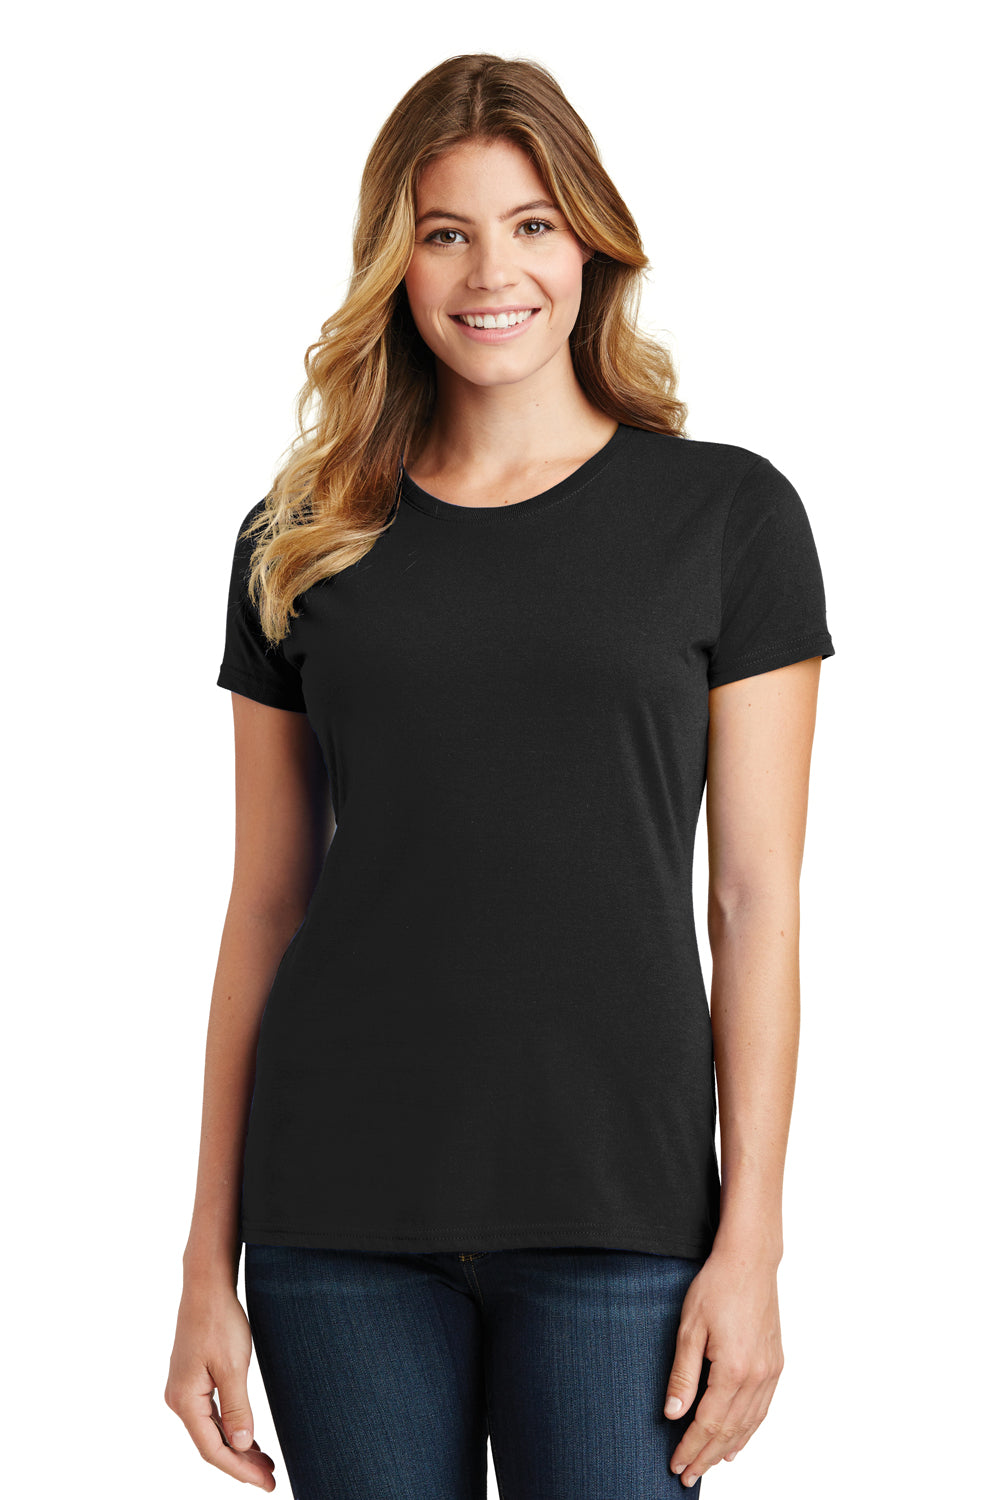 Port & Company LPC450 Womens Fan Favorite Short Sleeve Crewneck T-Shirt Black Front